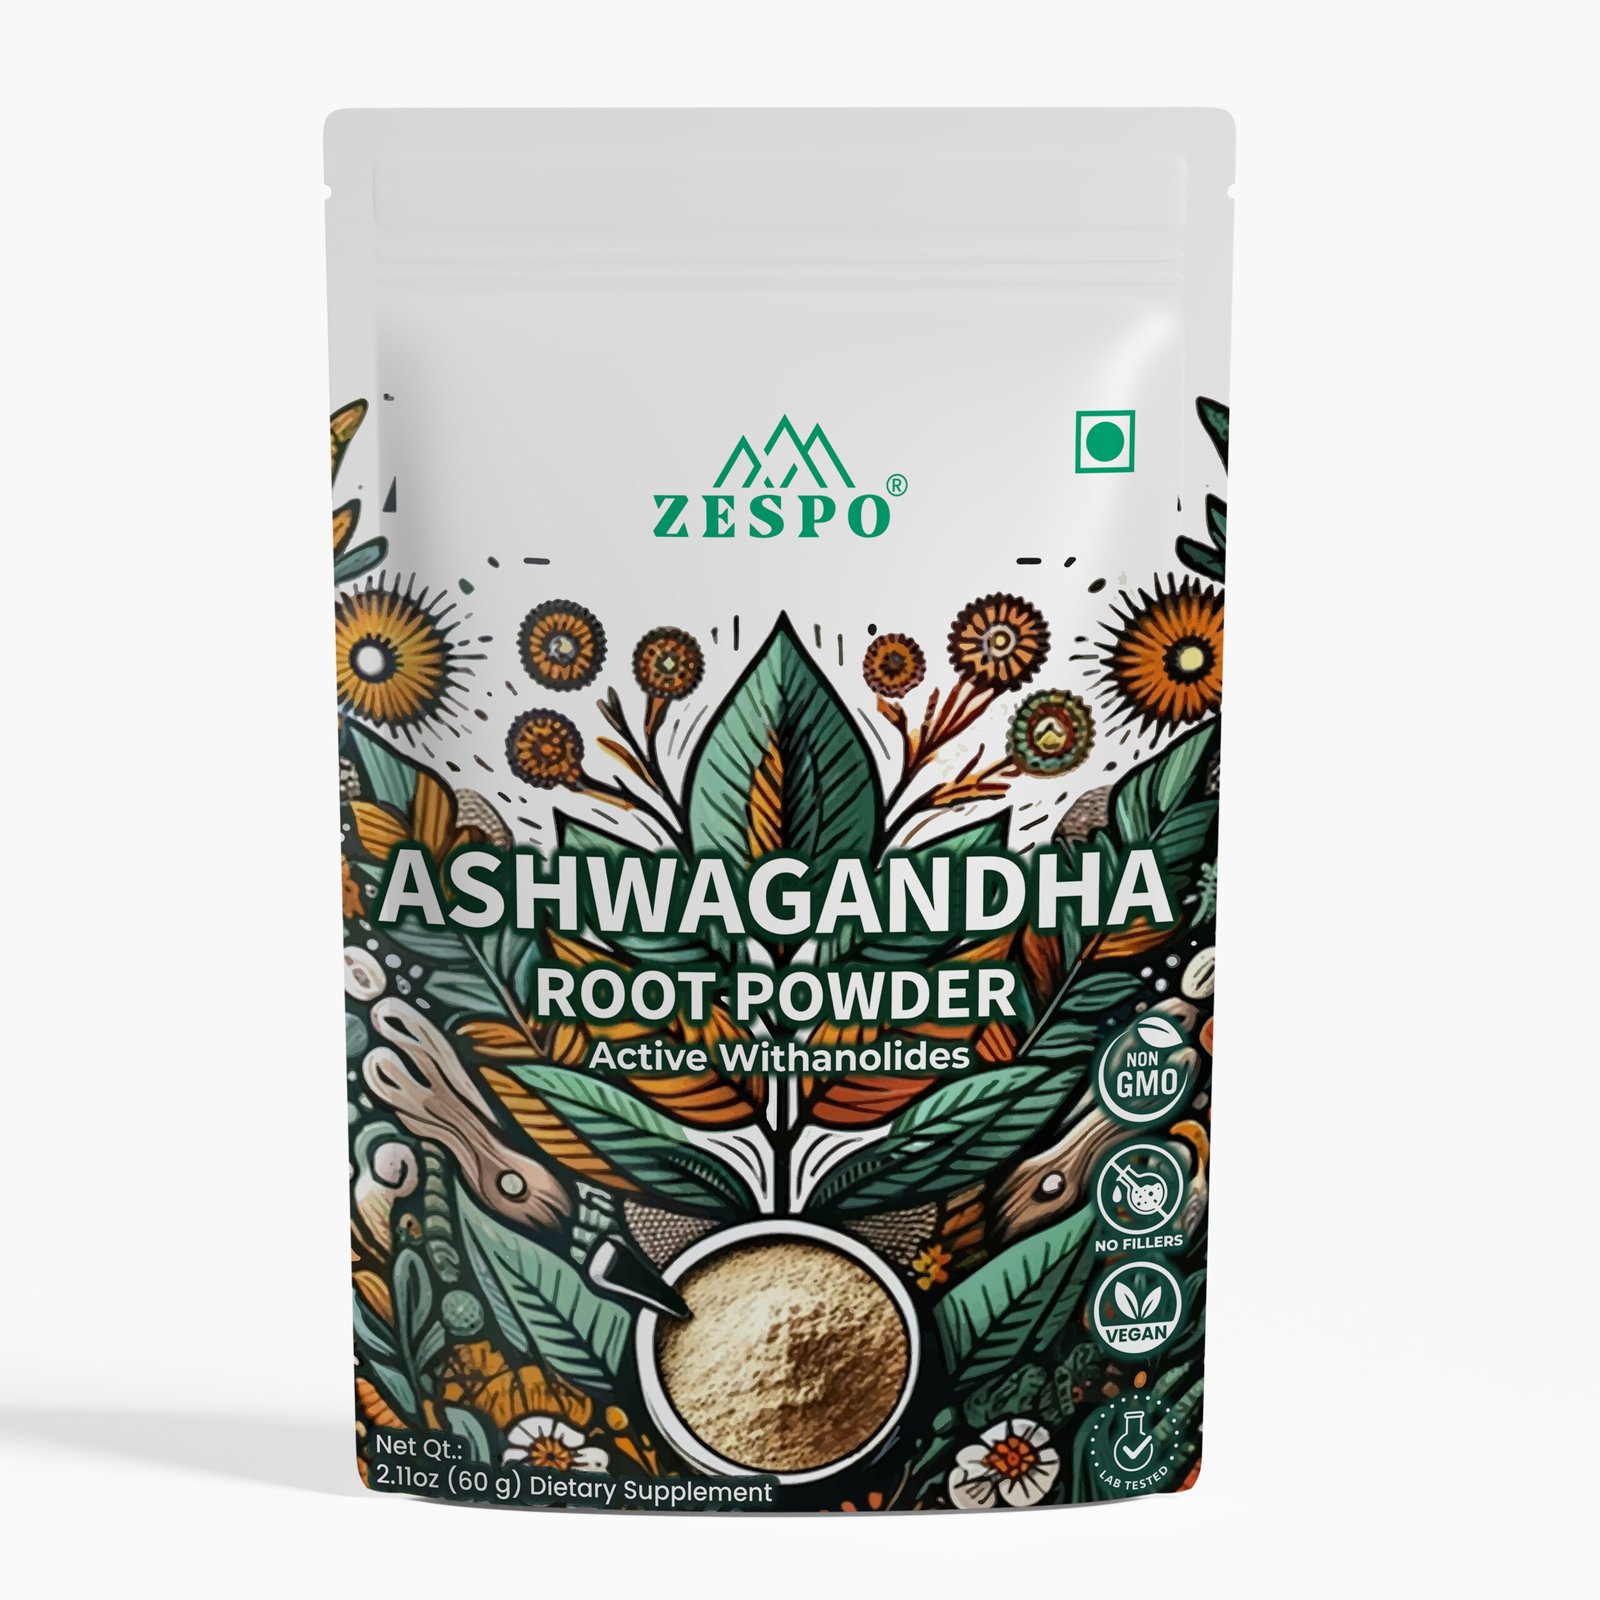 Ashwagandha extract powder